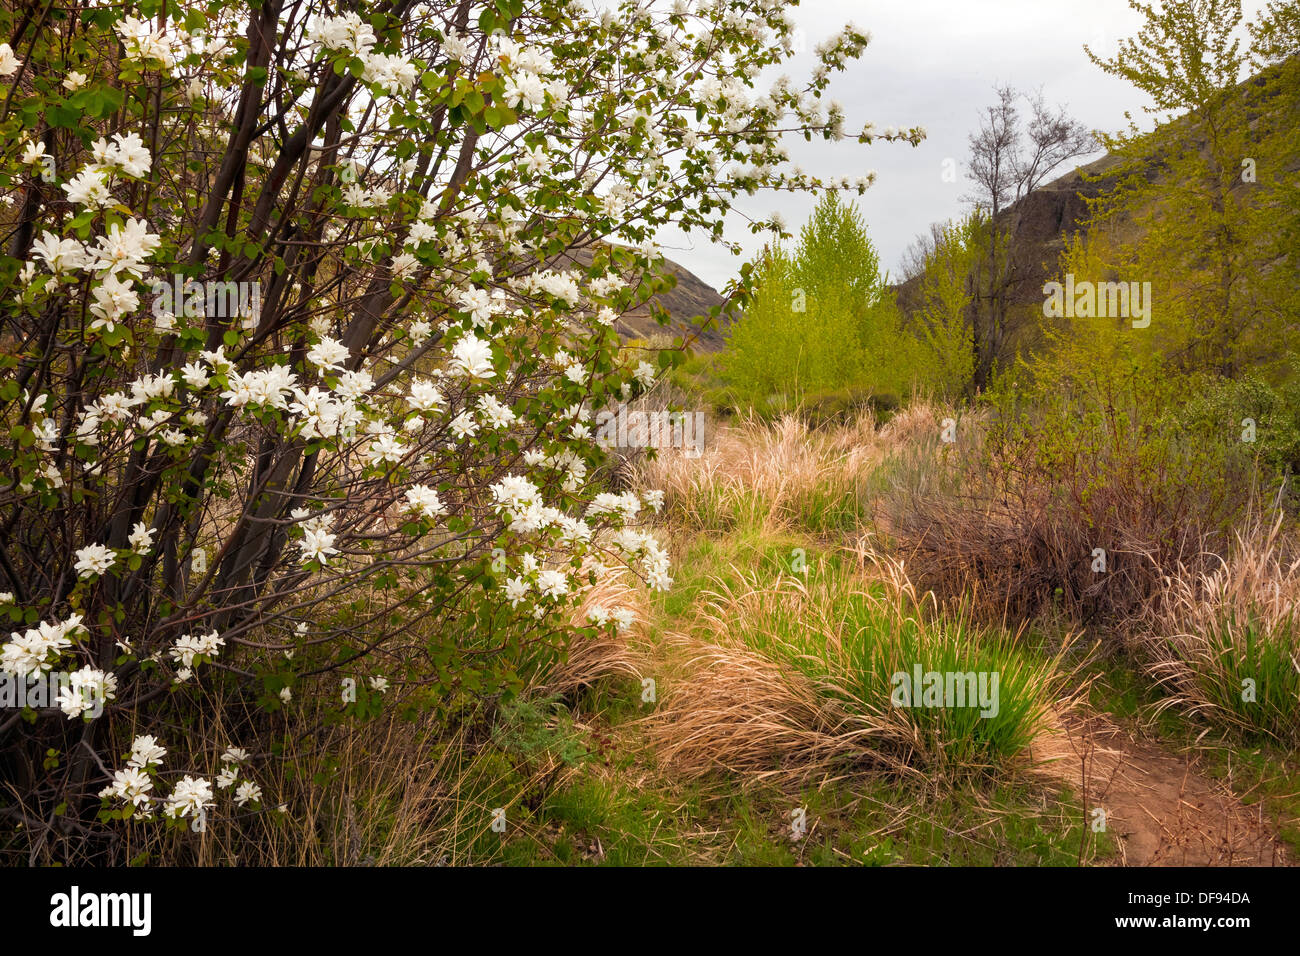 WASHINGTON - Trail Umtanum Creek Canyon im Erholungsgebiet L.T. Murray Tier-und Pflanzenwelt. Stockfoto